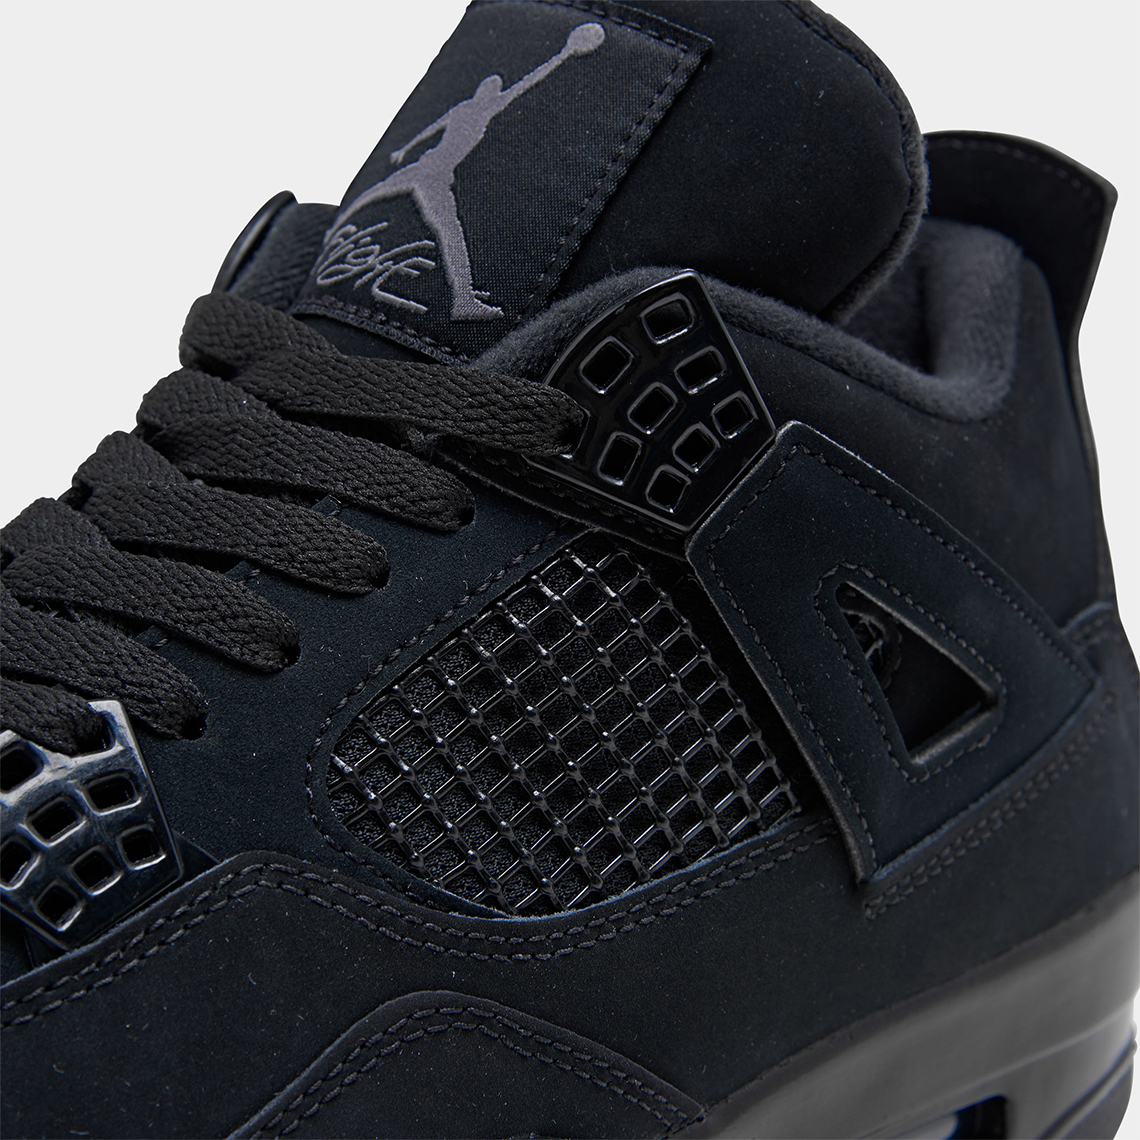 Nike air jordan low black white mint кросівки Retro Black Cat 2020 Cu1110 010 5